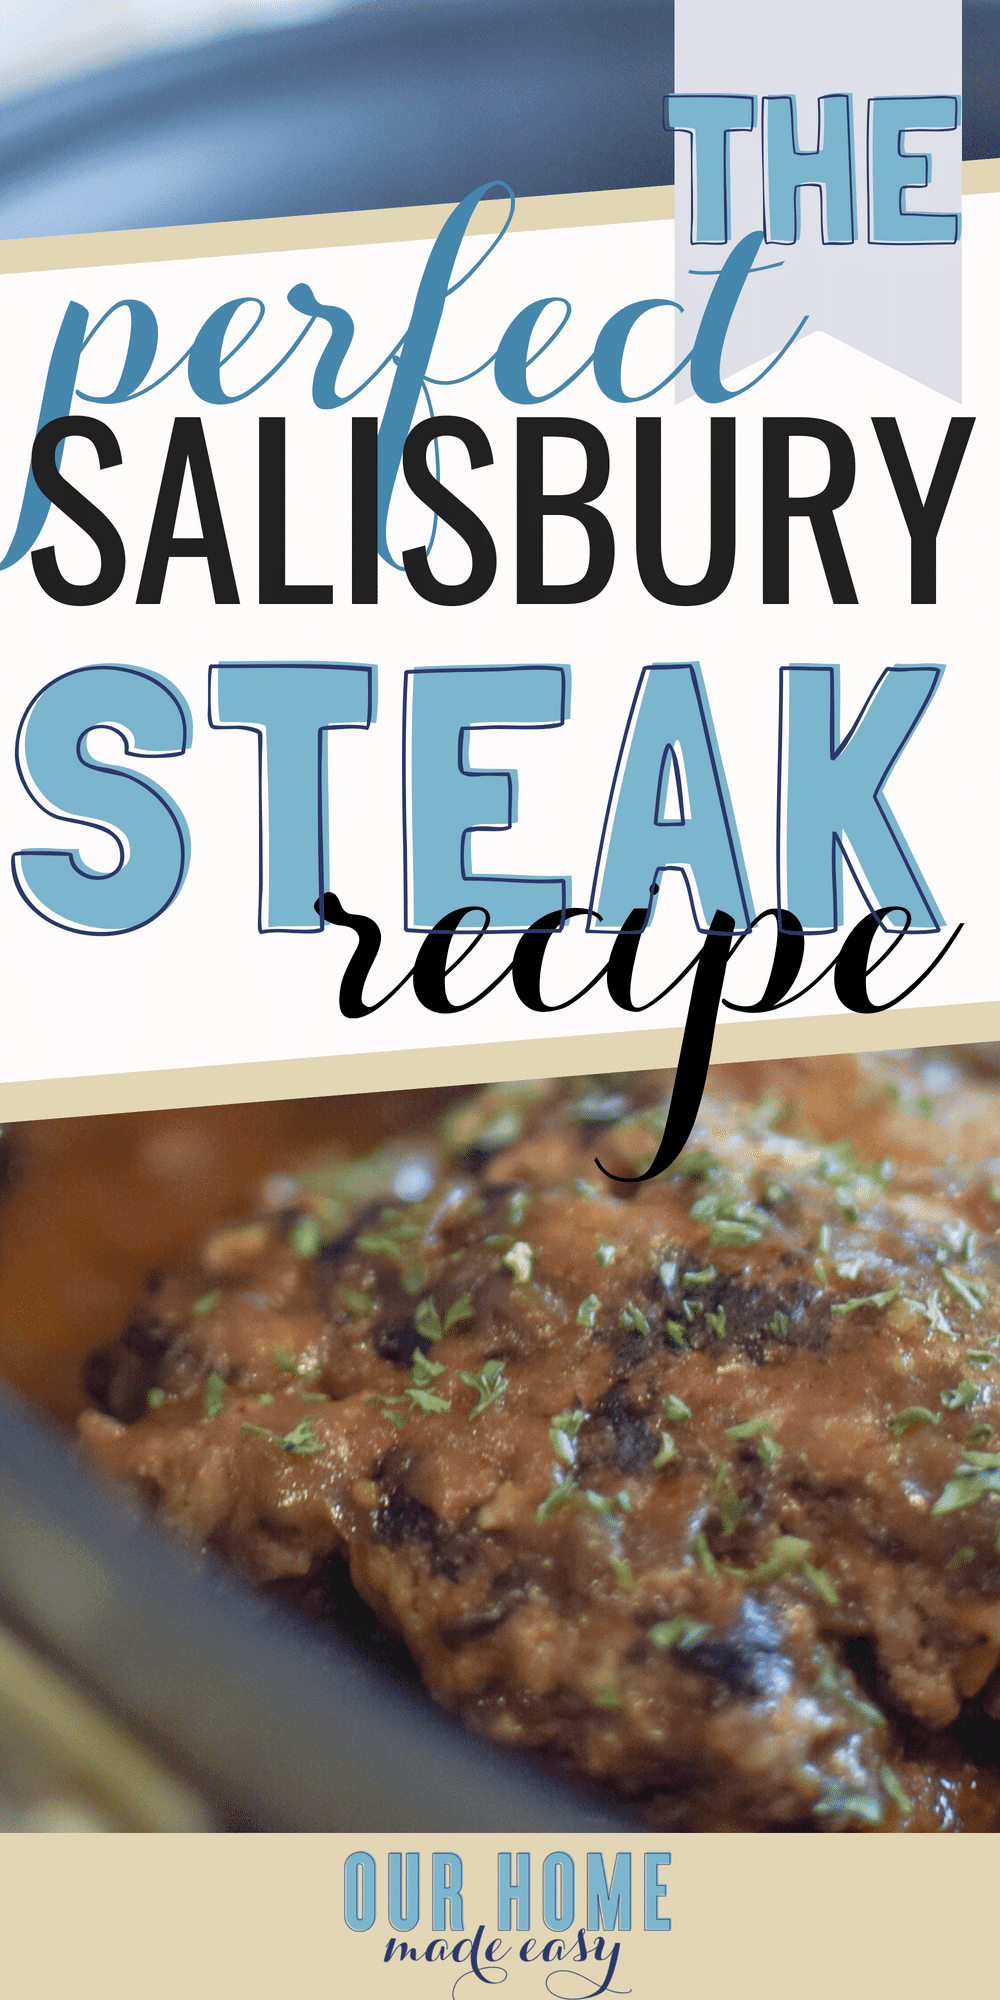 Make this easy Salisbury steak recipe for dinner! It's comfort food with almost no effort! #dinner #recipe #beef #dinnerrecipe